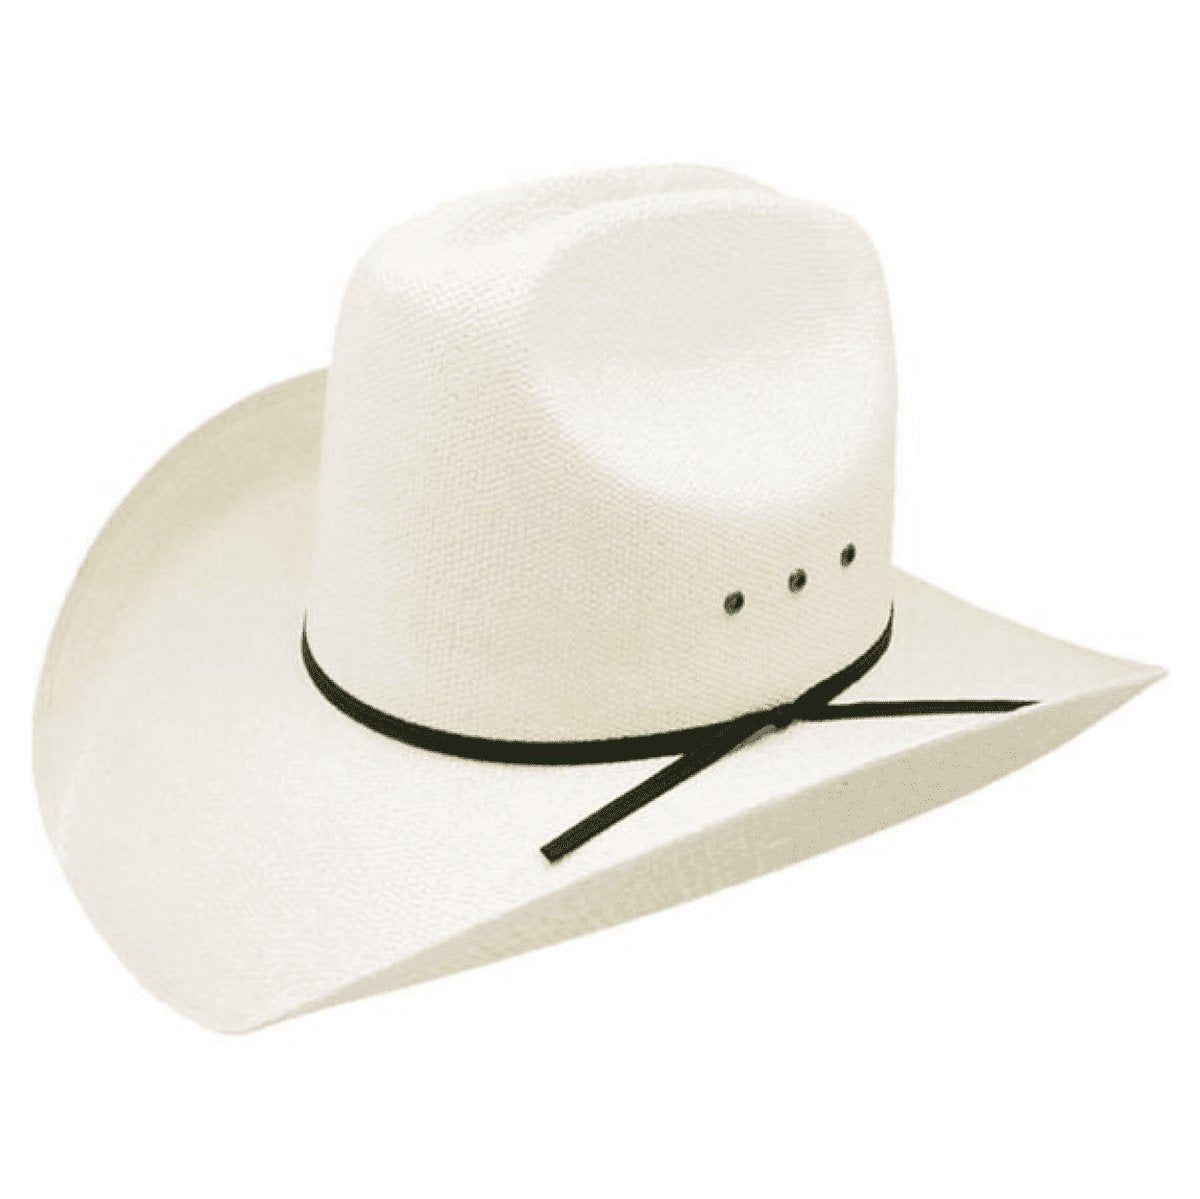 Resistol Cowboy Hat QH60 10X Shantung Straw RS81638140-QH60 - Resistol